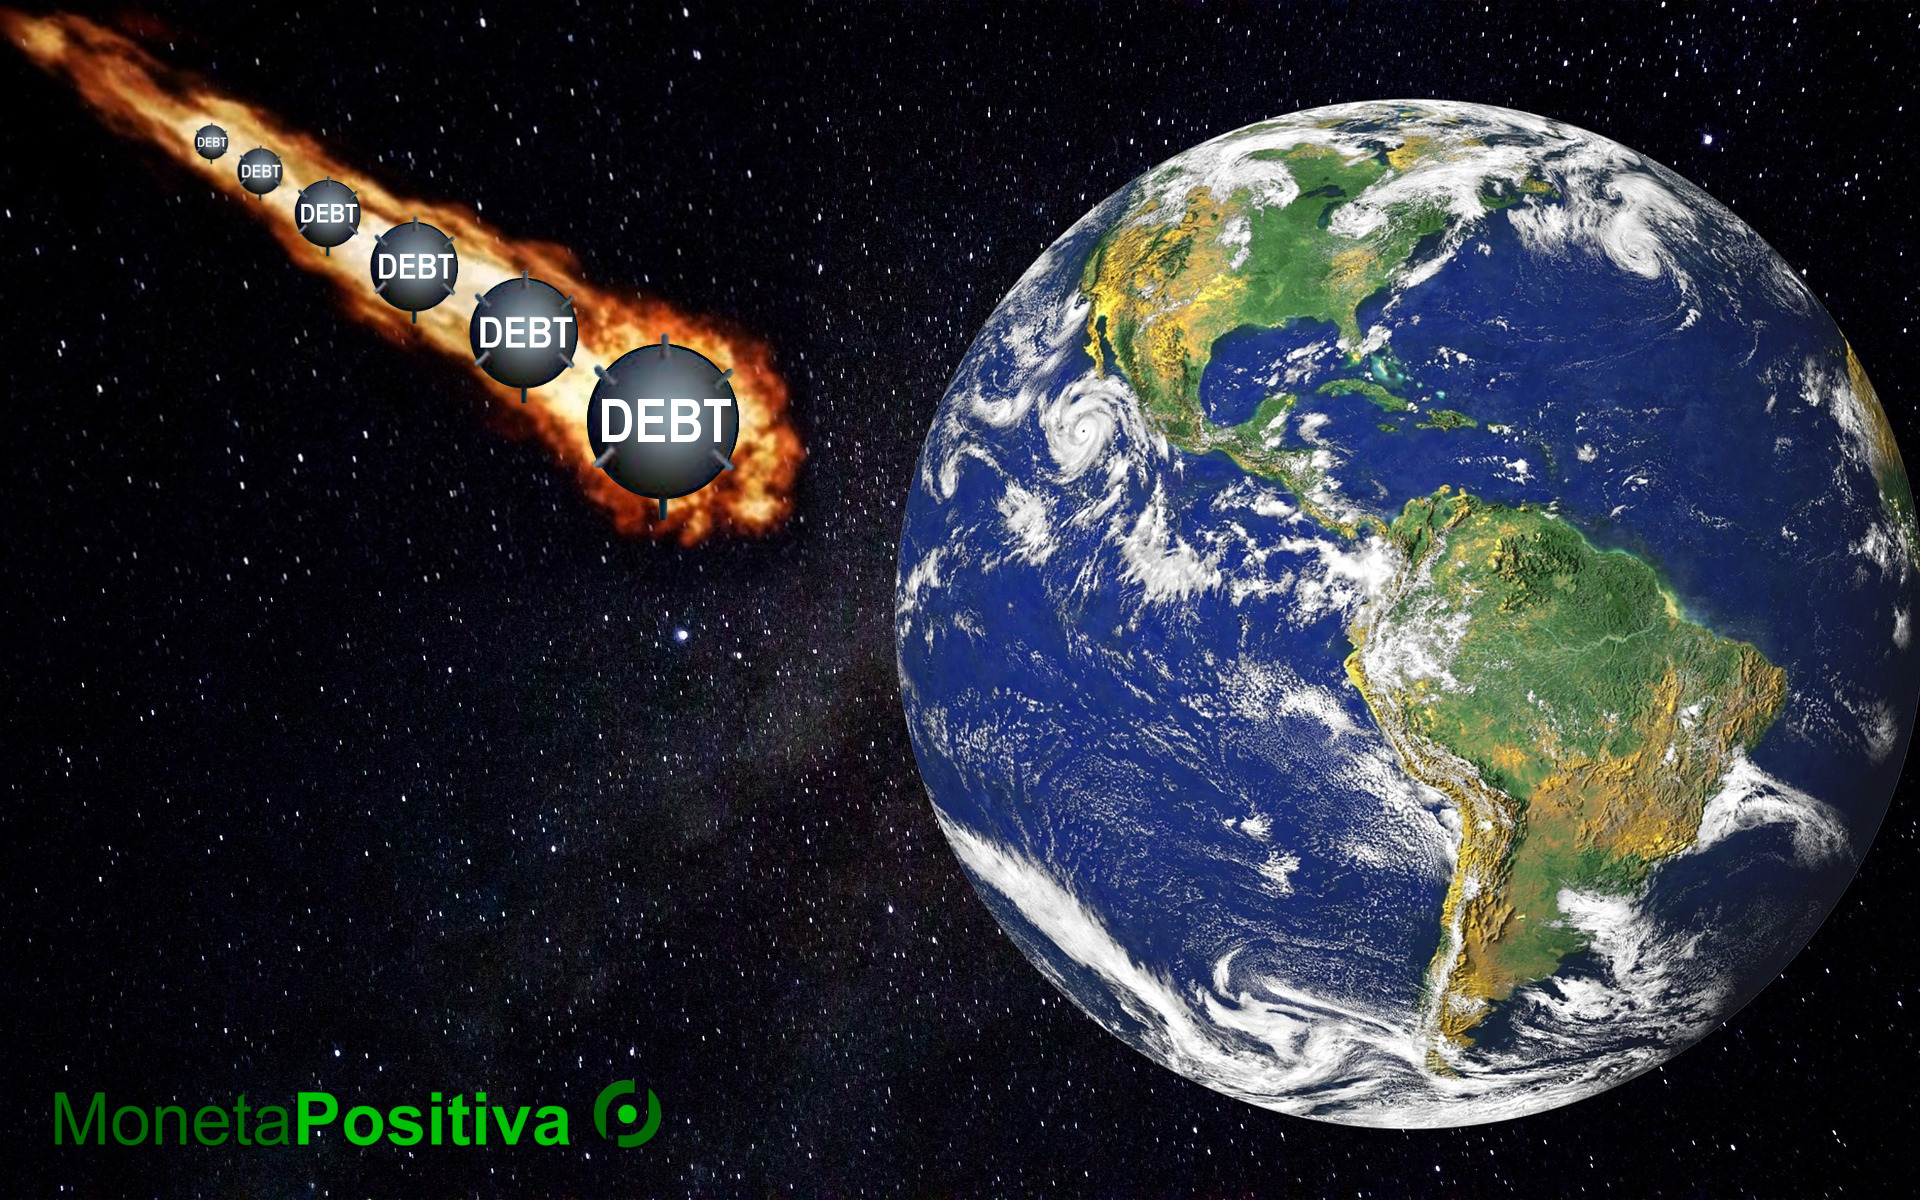 Moneta Positiva_Meteorite_debito